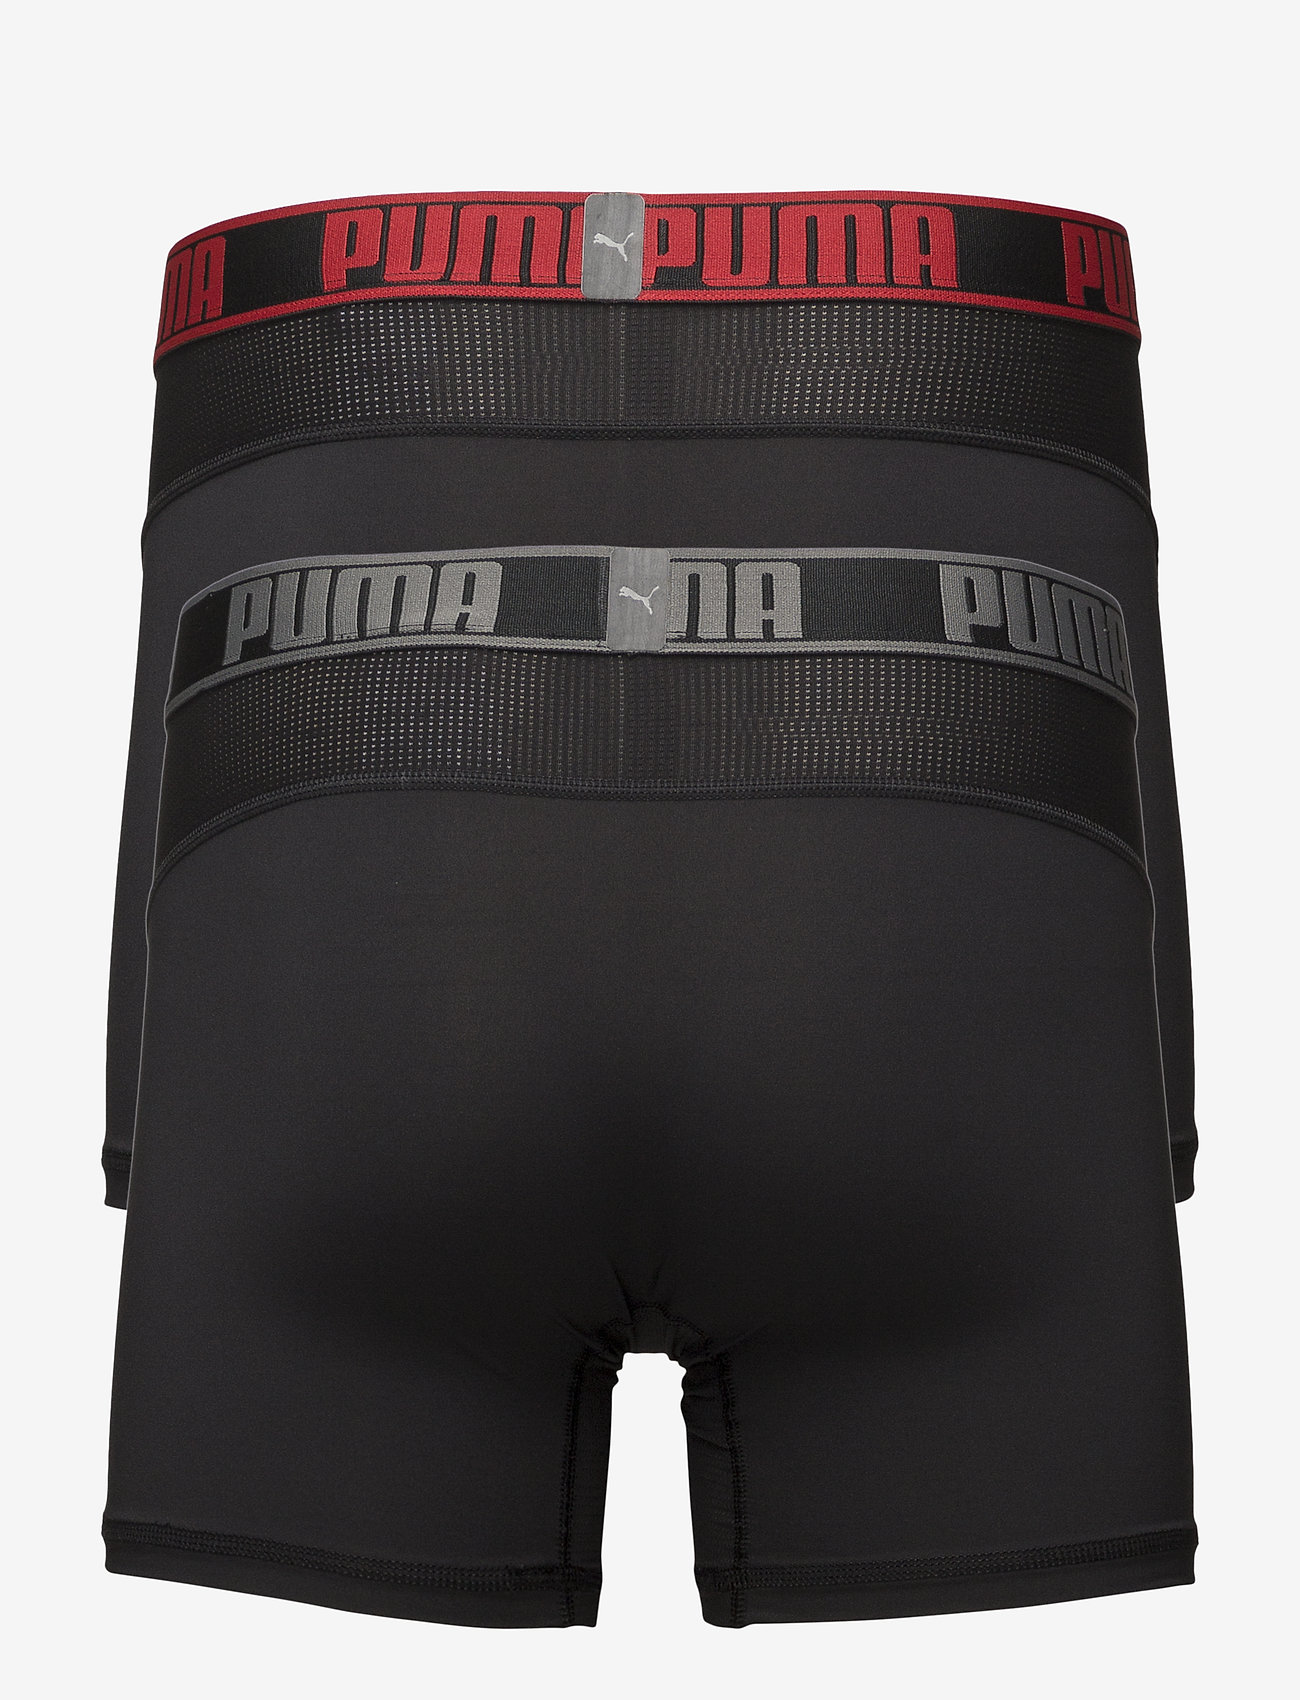 puma boxer briefs size chart